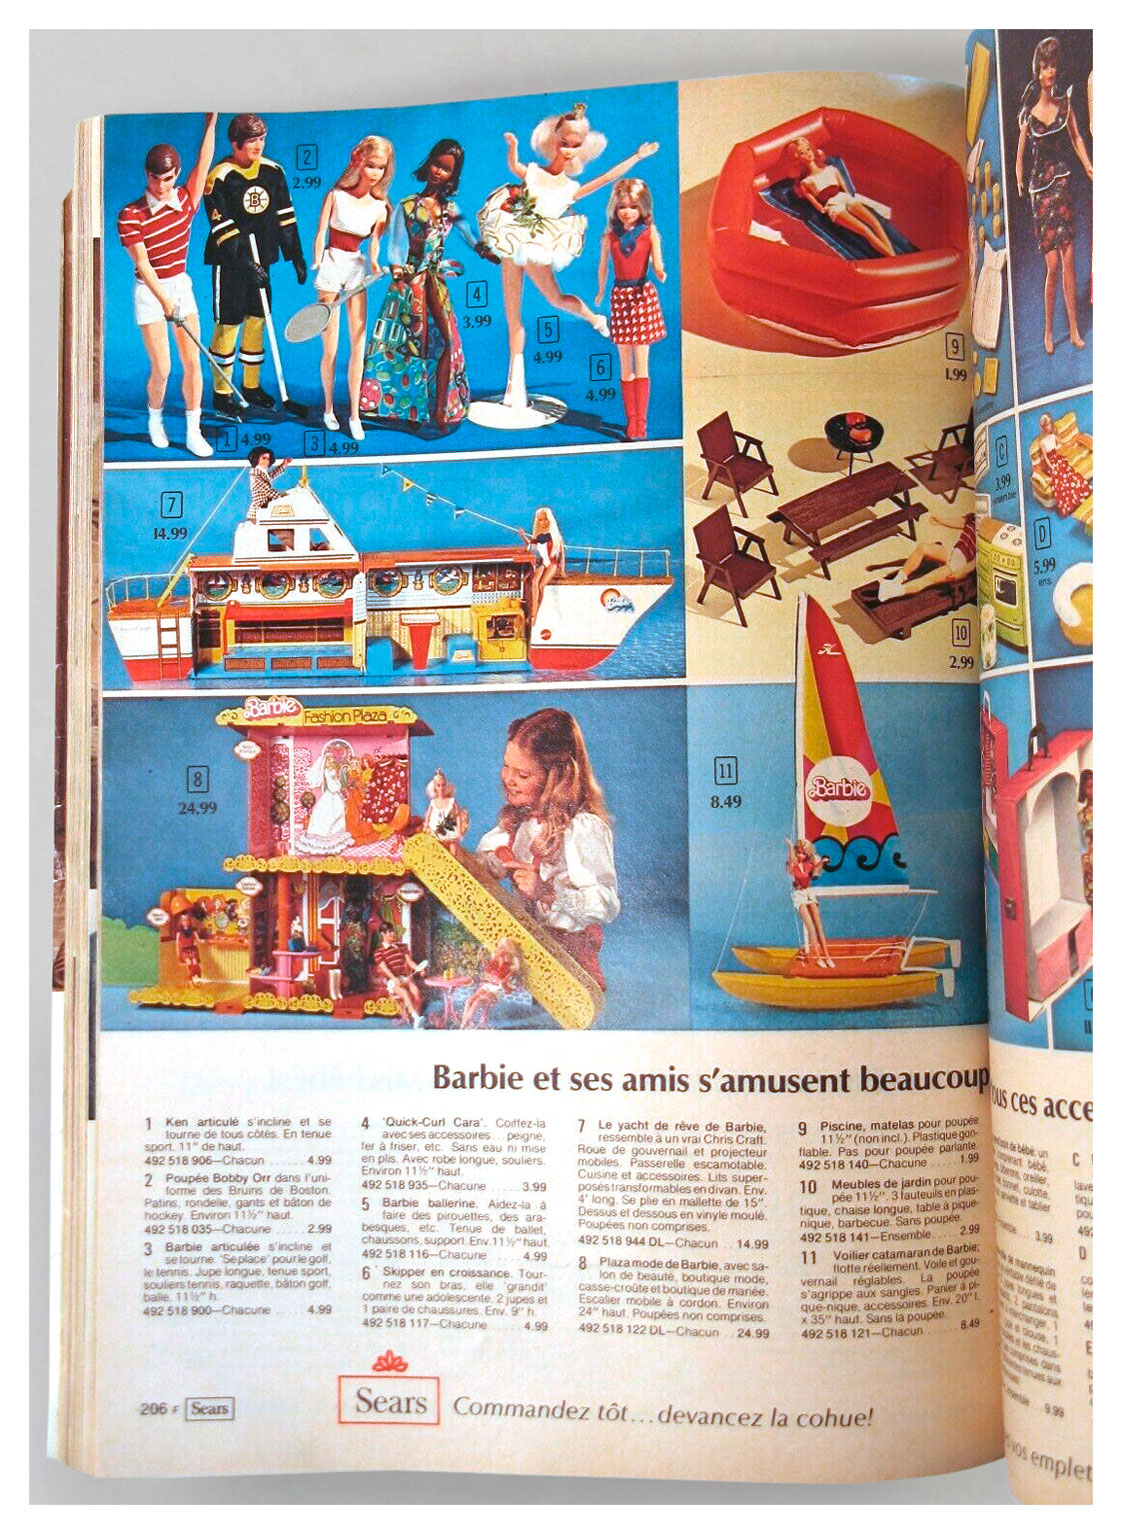 1976 Canadian Sears Cadeaux de Noel catalogue